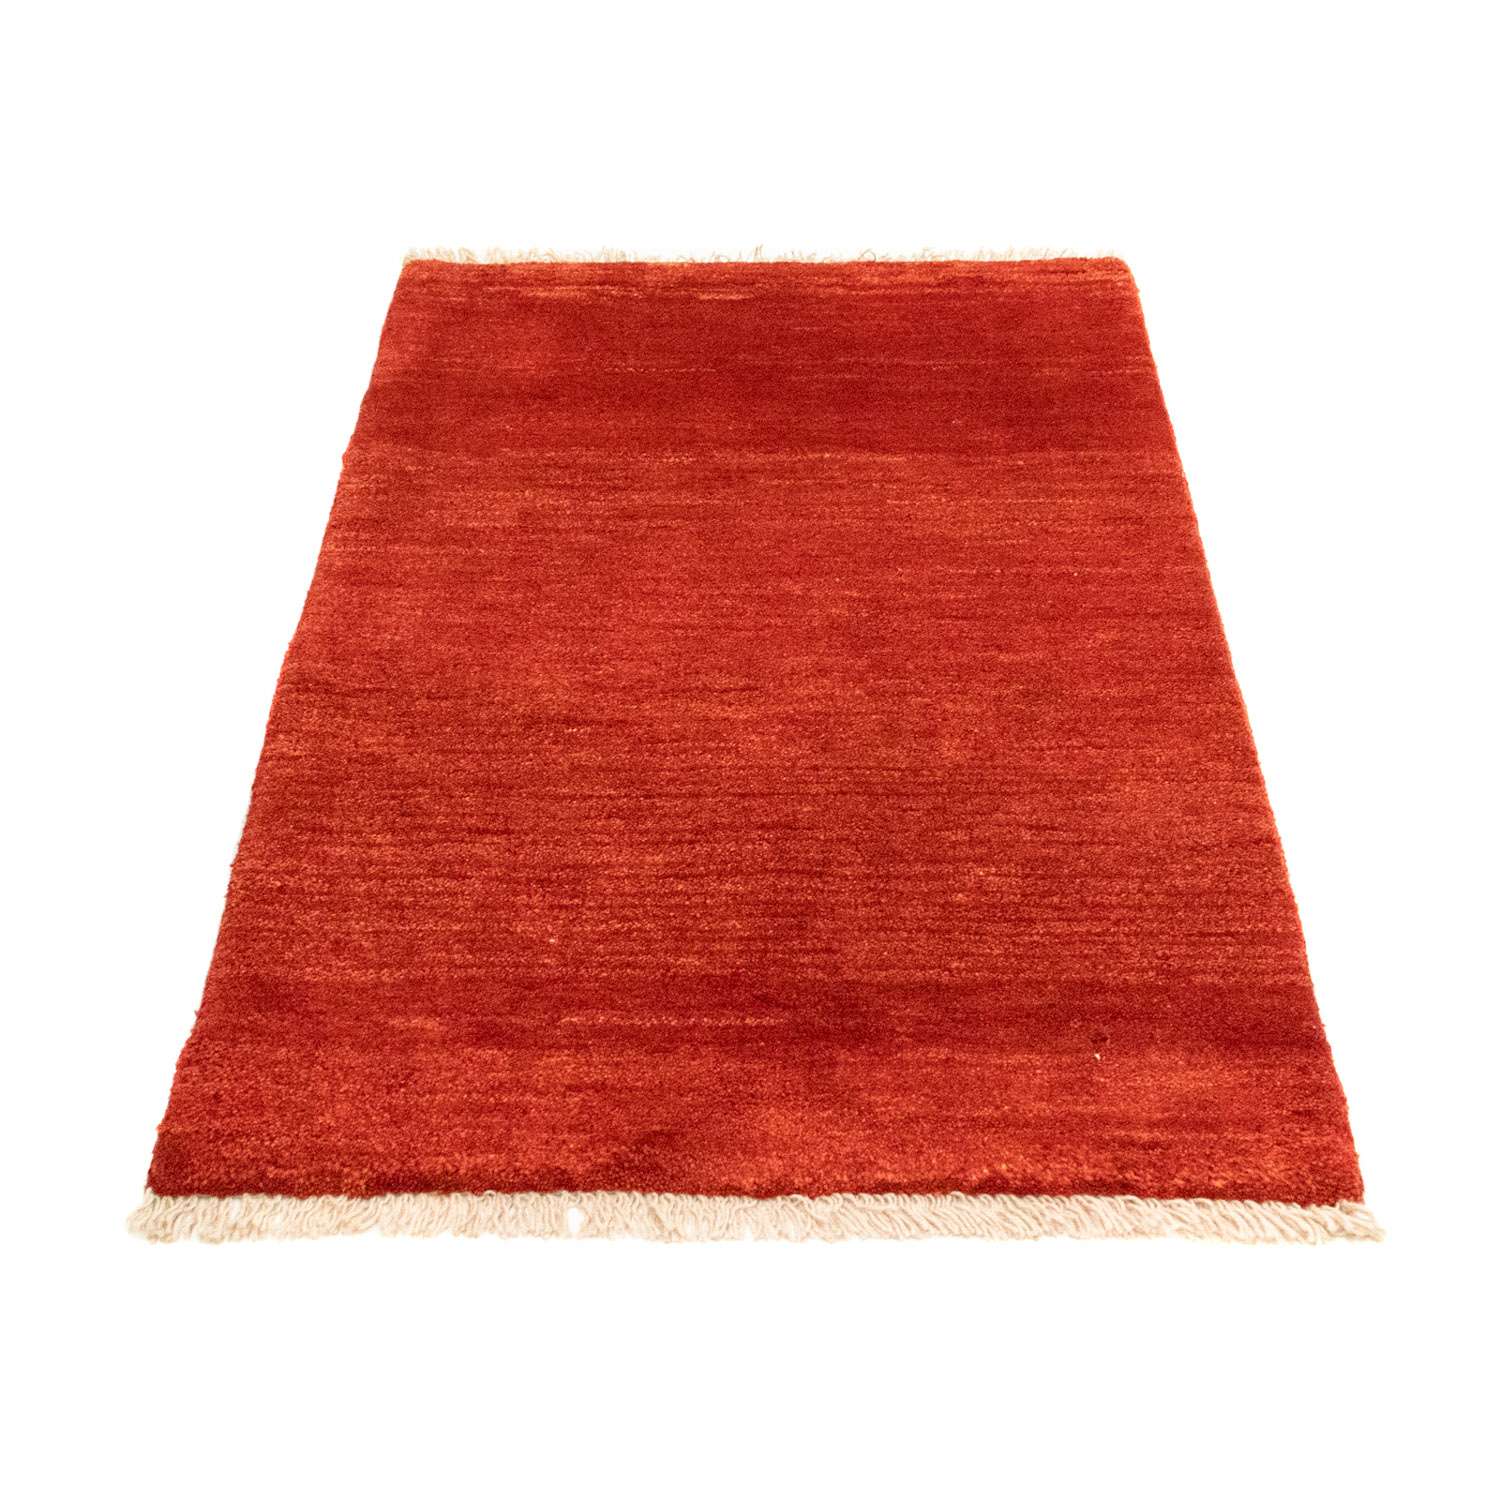 Gabbeh-teppe - persisk - 126 x 75 cm - rød